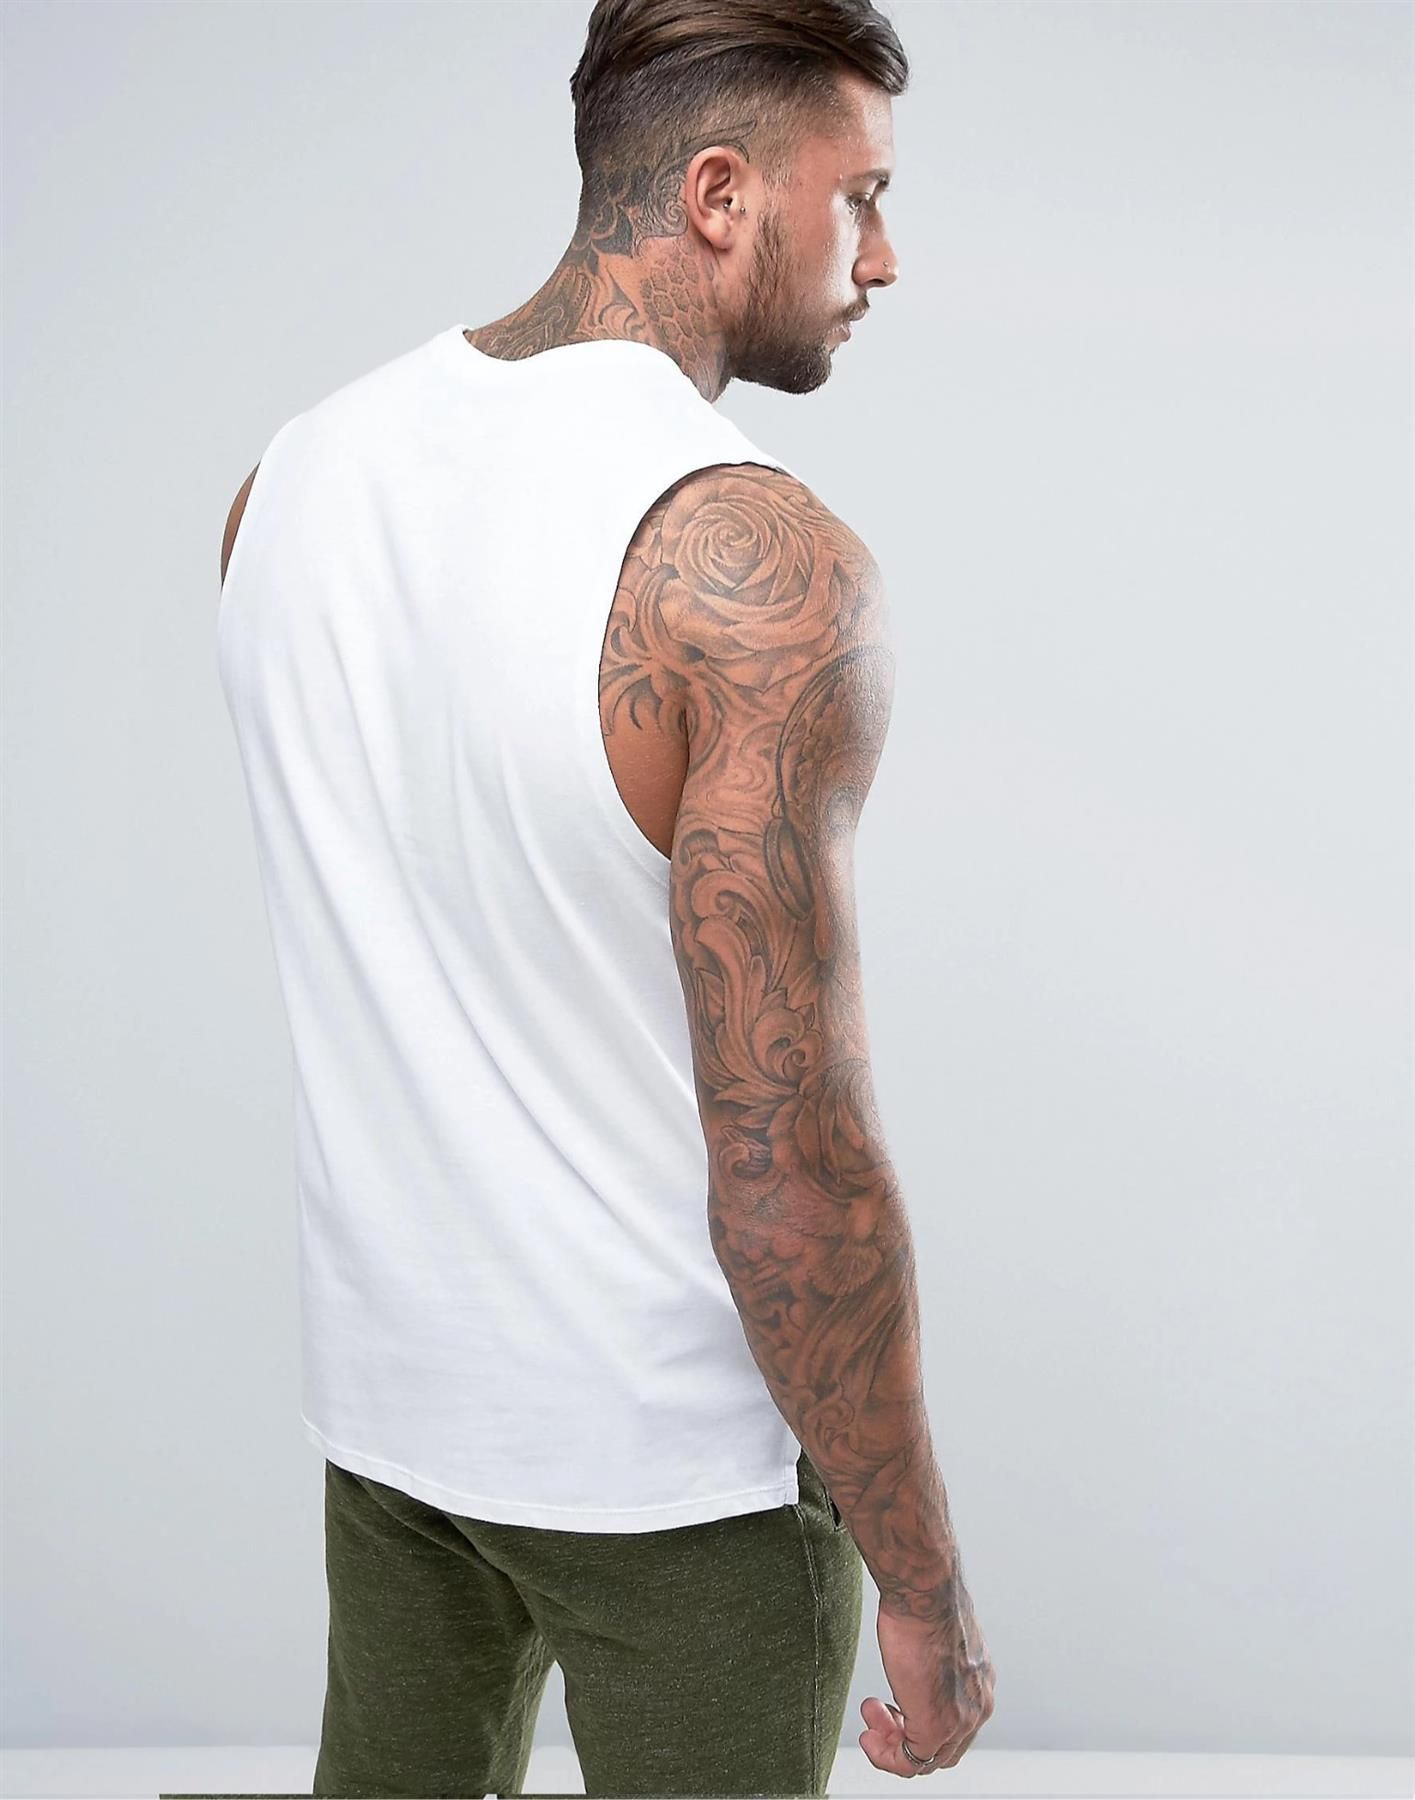 Nike Black Sleeveless T-shirt With Retro Logo.
Sleeveless Vest Shirt From Nike.
Breathable Cotton.
Round Neck.
Athletic Cut.